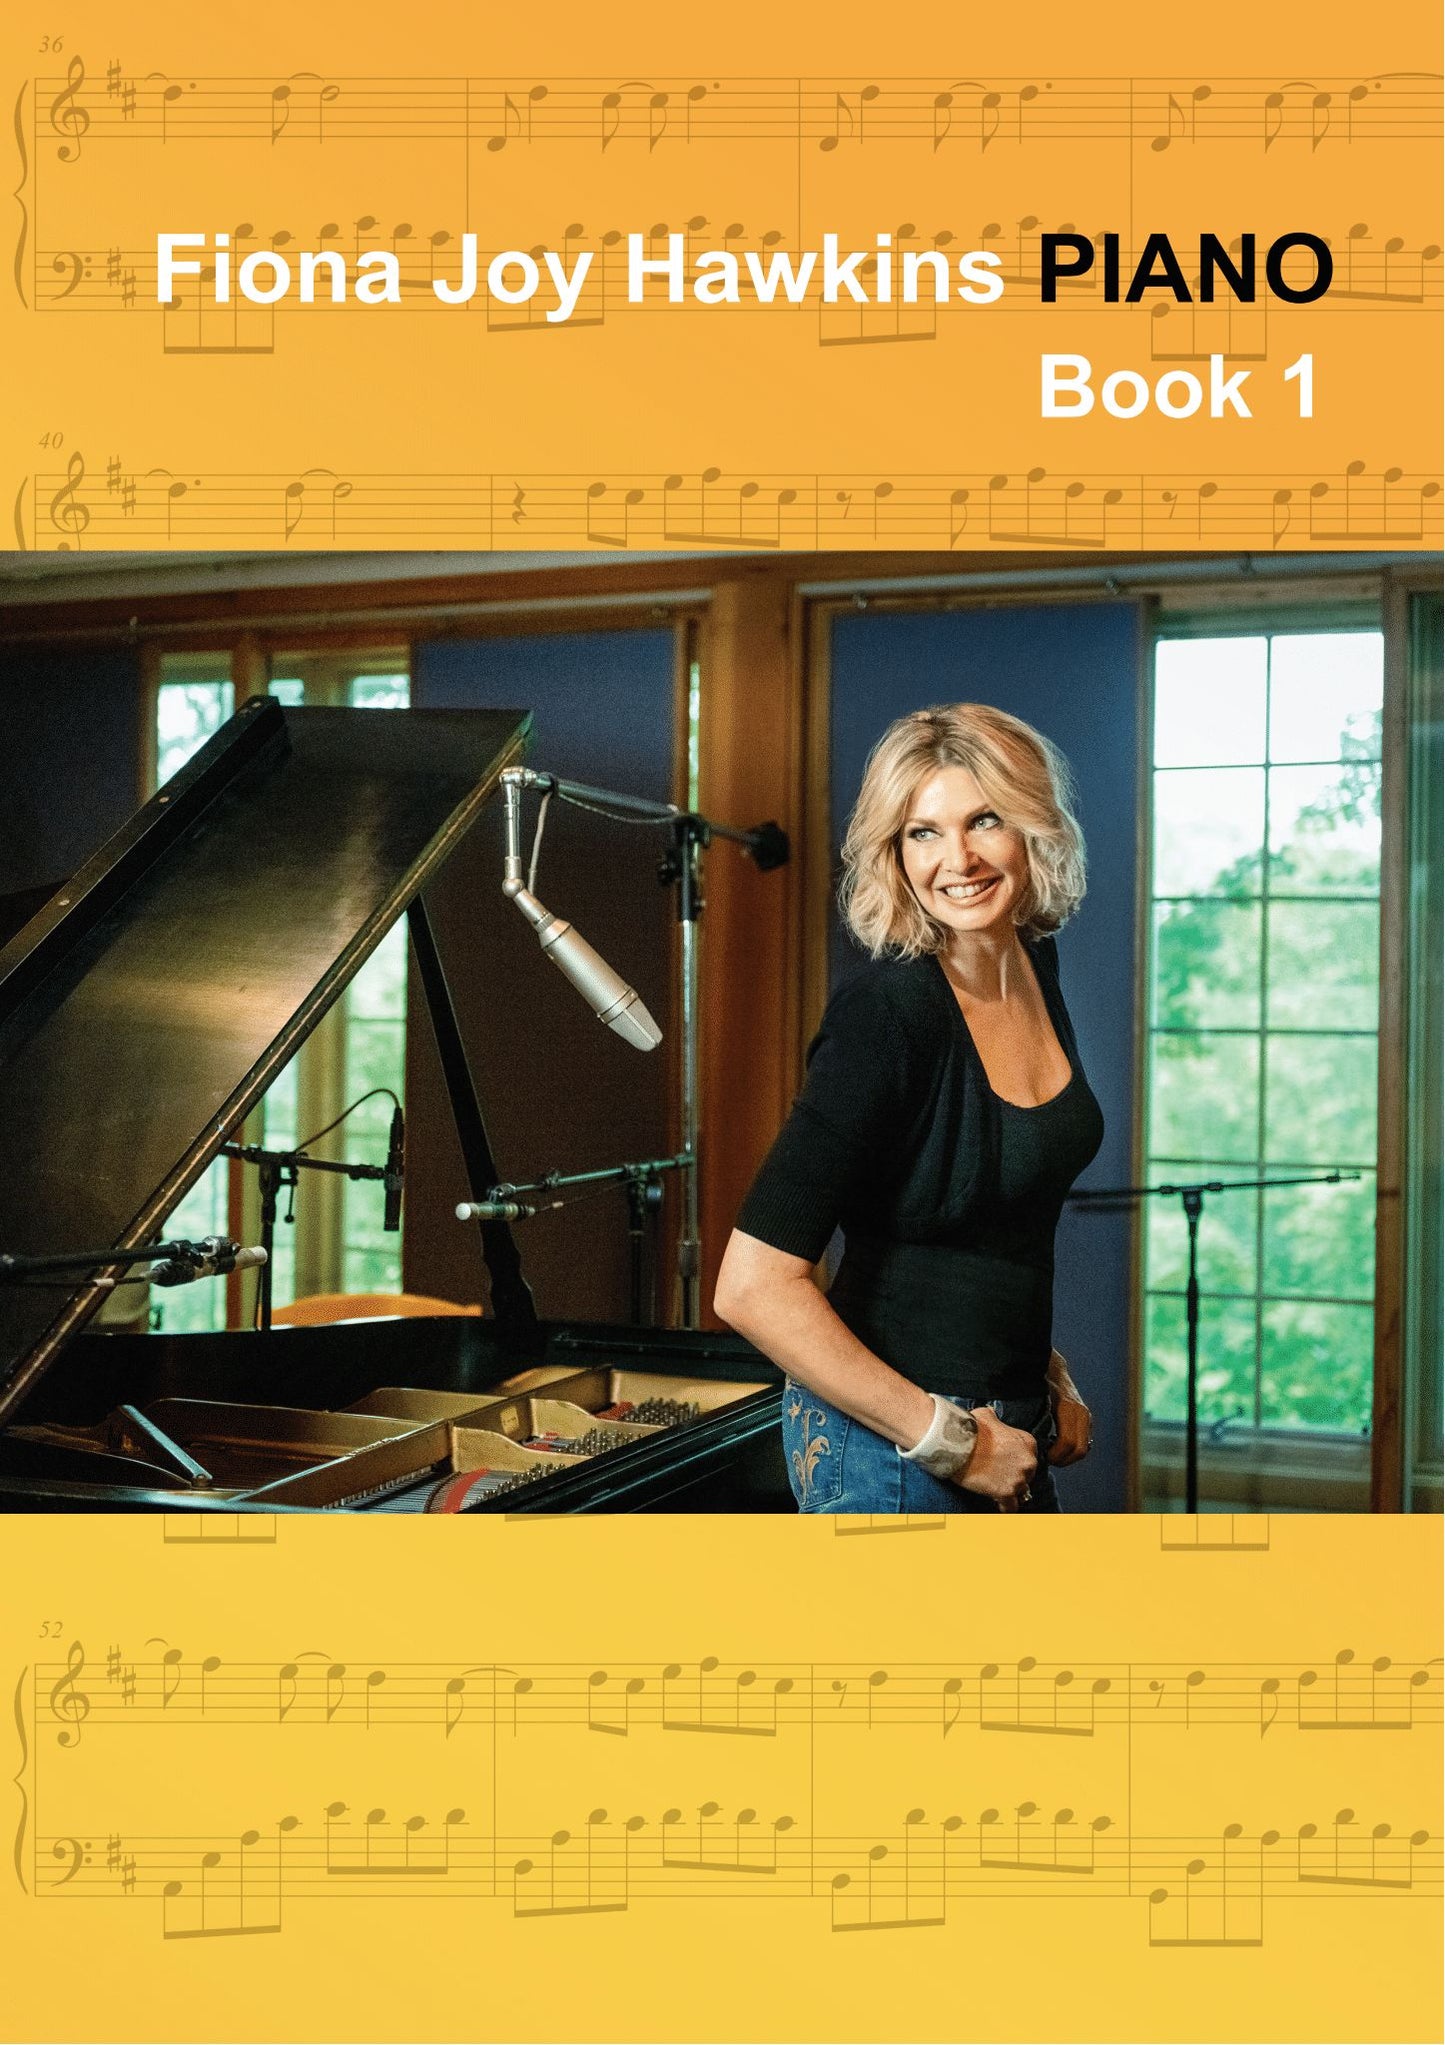 Sheet Music - PIANO - Book 1, Fiona Joy Hawkins